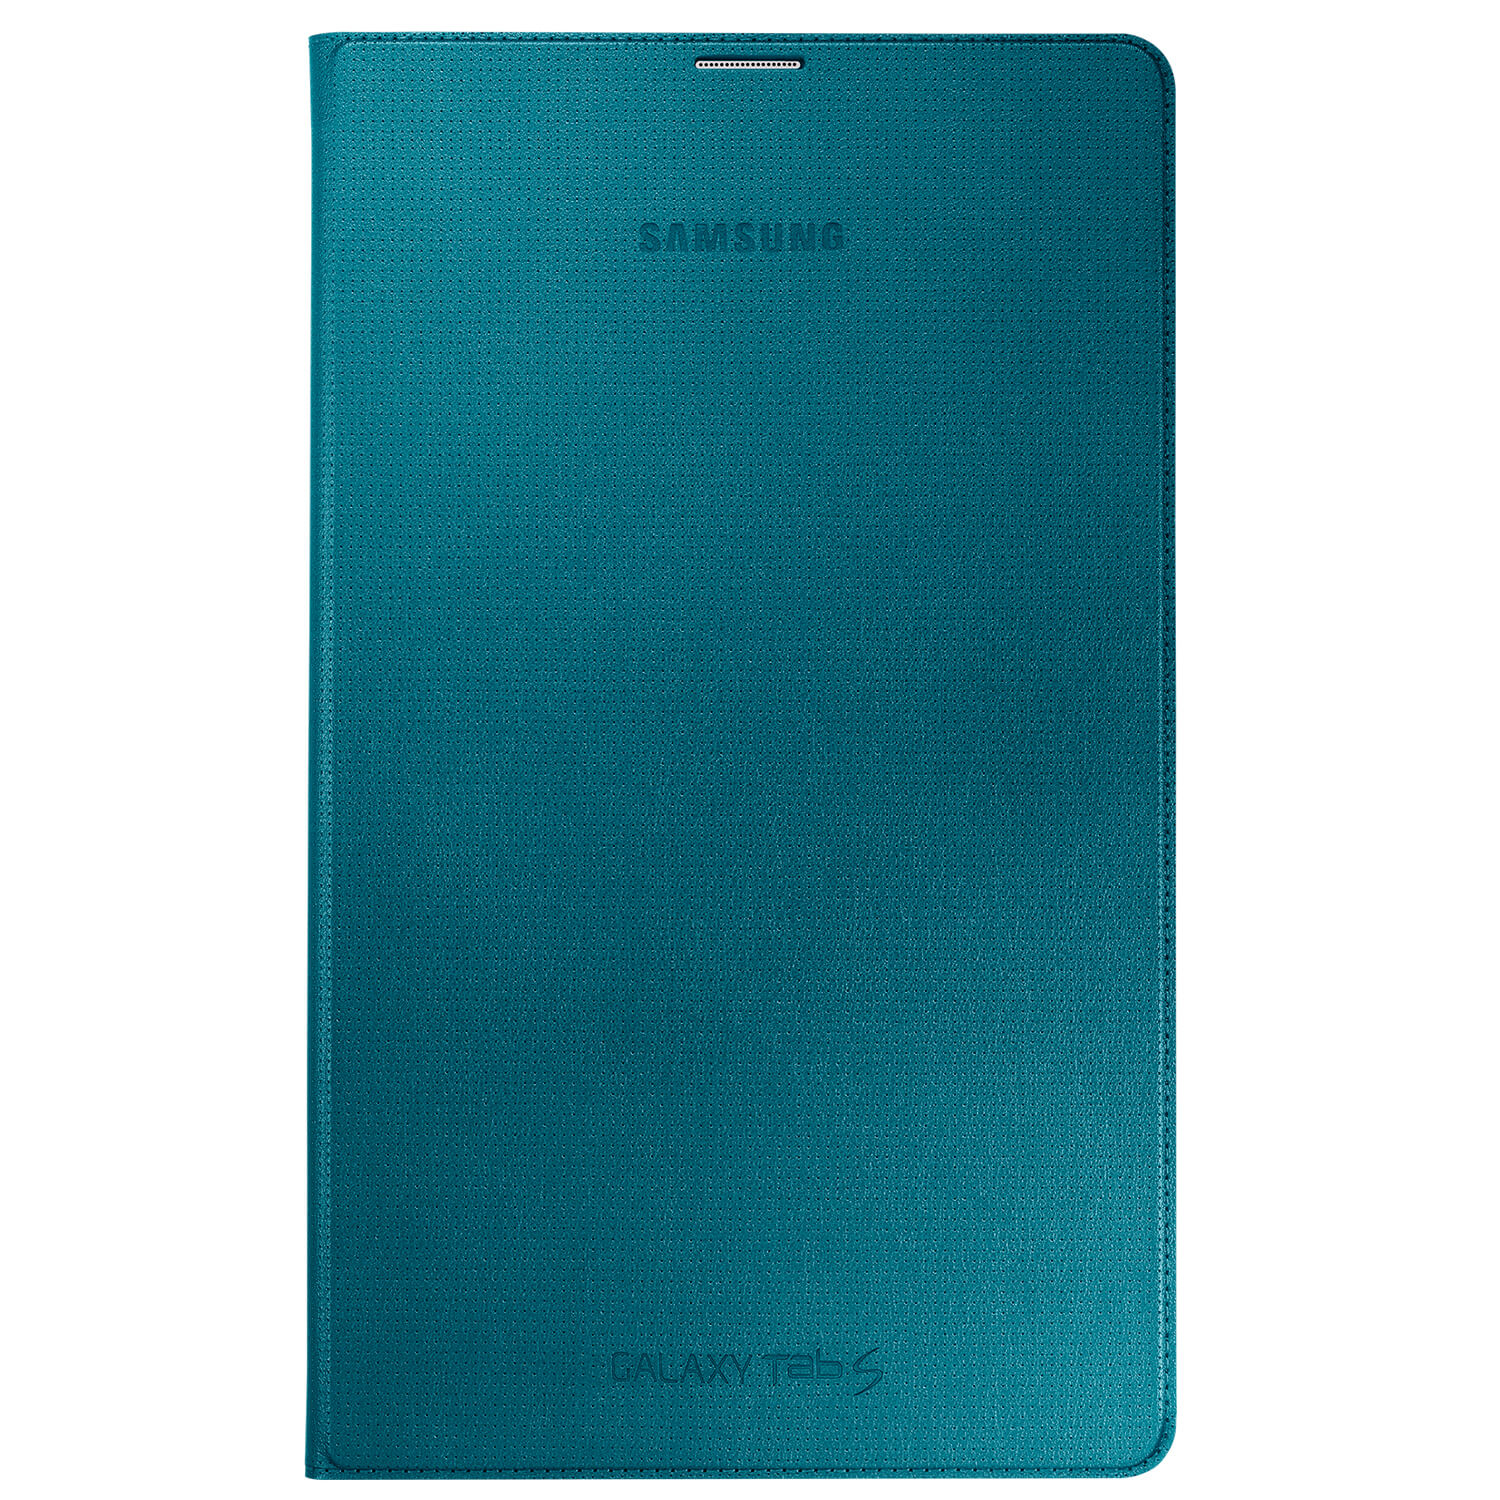 Samsung Simple Cover EF-DT700 - оригинално кожено покритие за Samsung Galaxy Tab S 8.4 (син)